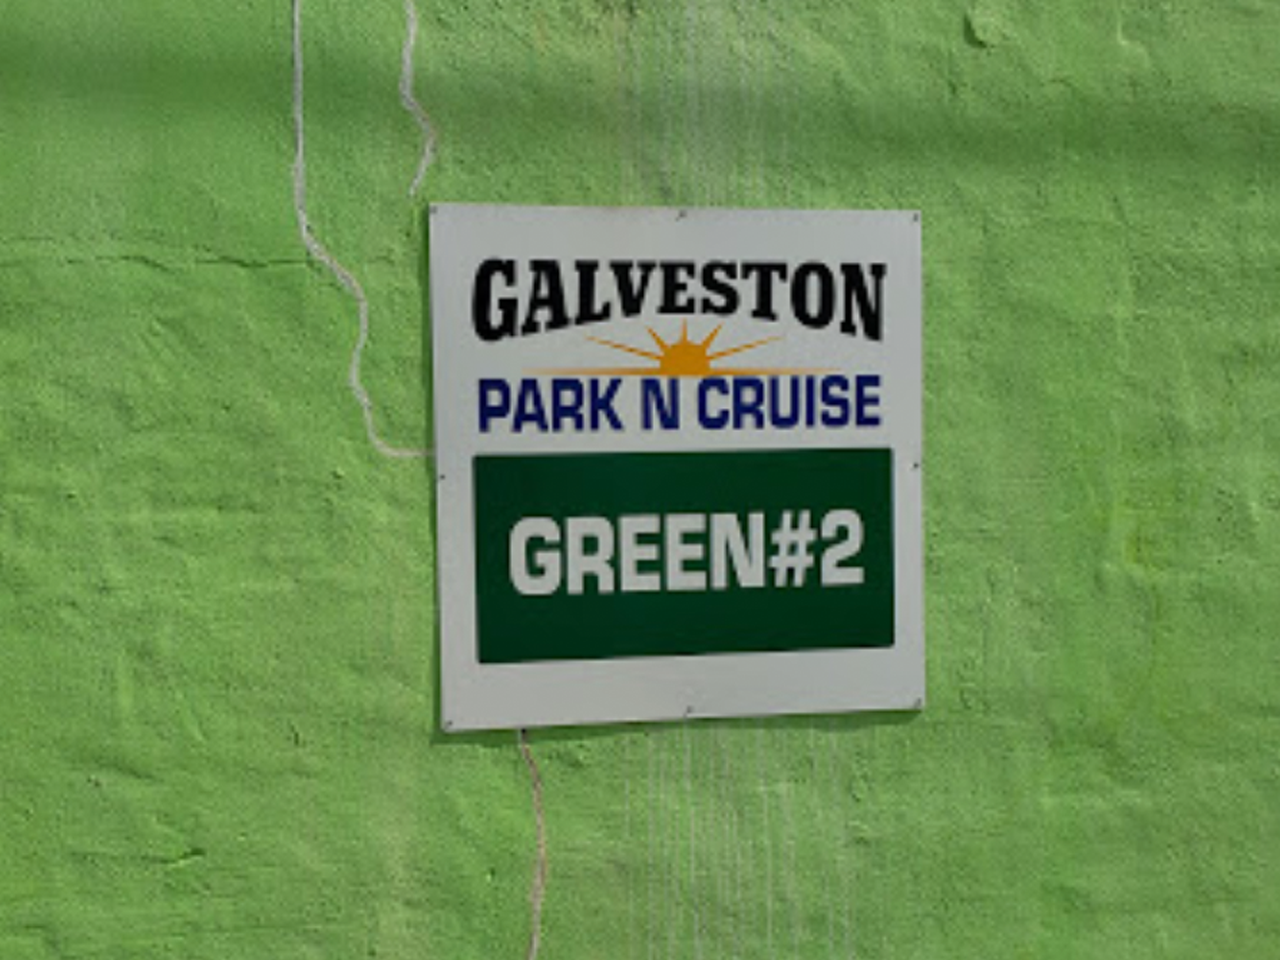 Galveston Park N Cruise Visit Galveston